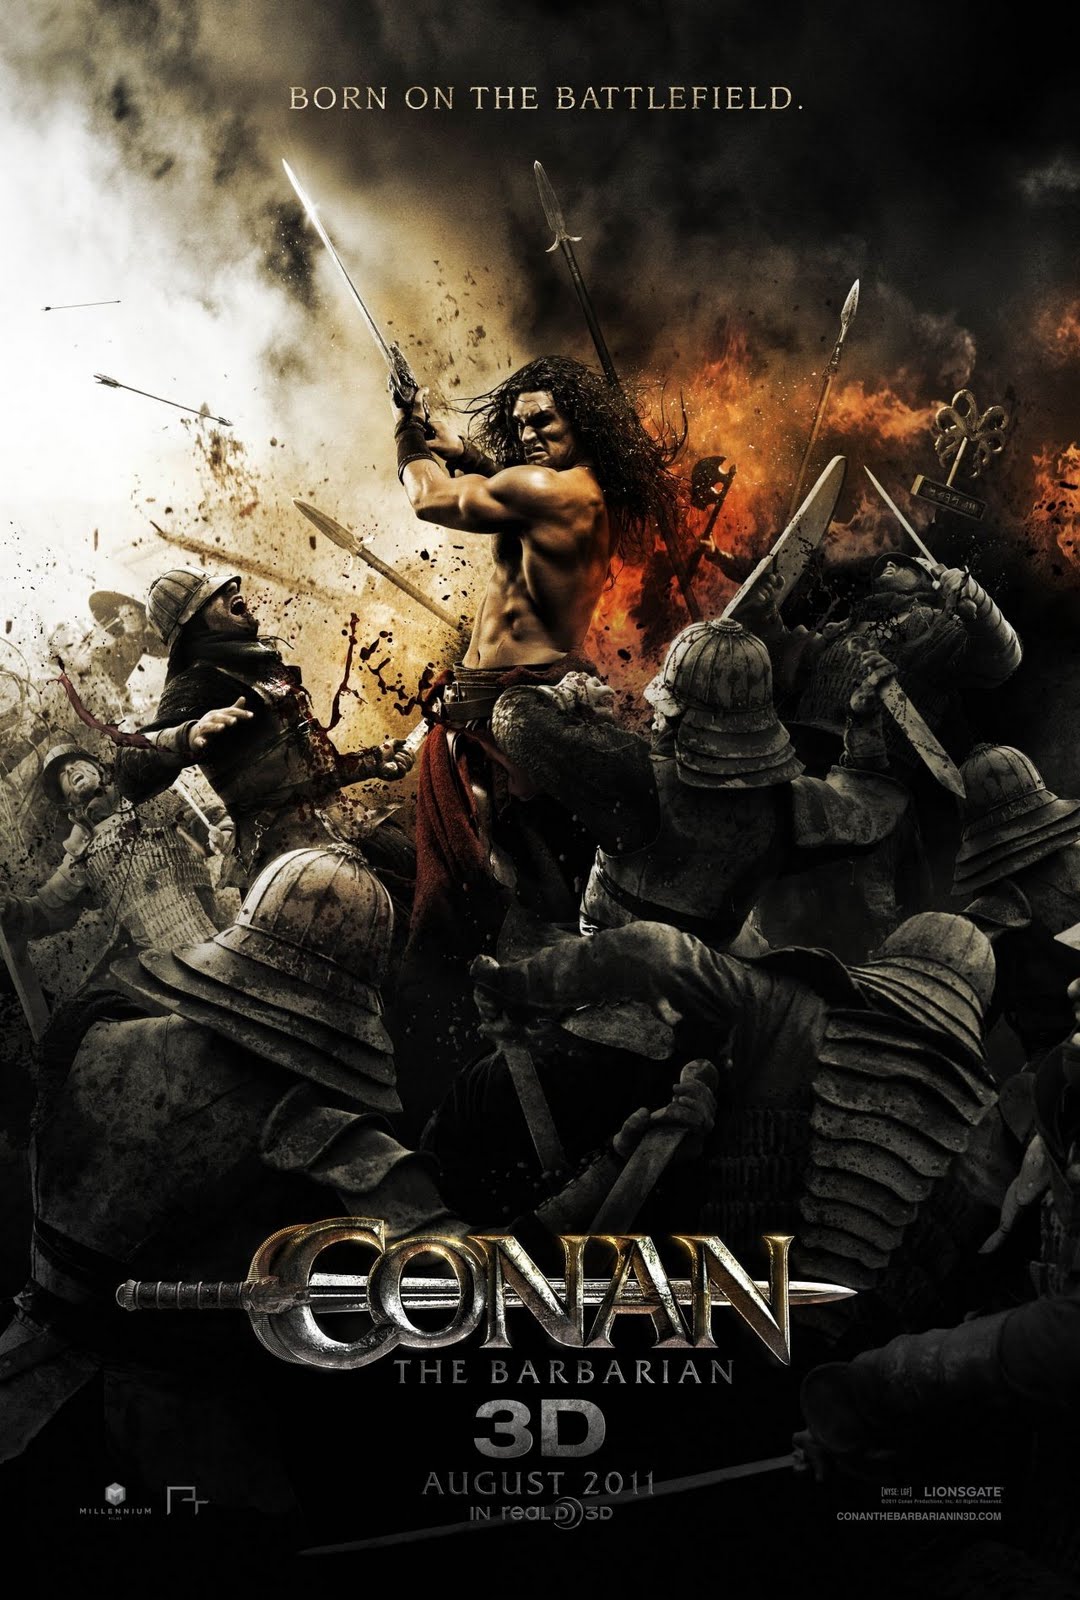 http://1.bp.blogspot.com/-hMOKkBq_-PY/TmjI_4GHmYI/AAAAAAAALqM/vYK_-U6BSSA/s1600/Conan+The+Barbarian+2011+Poster.jpg